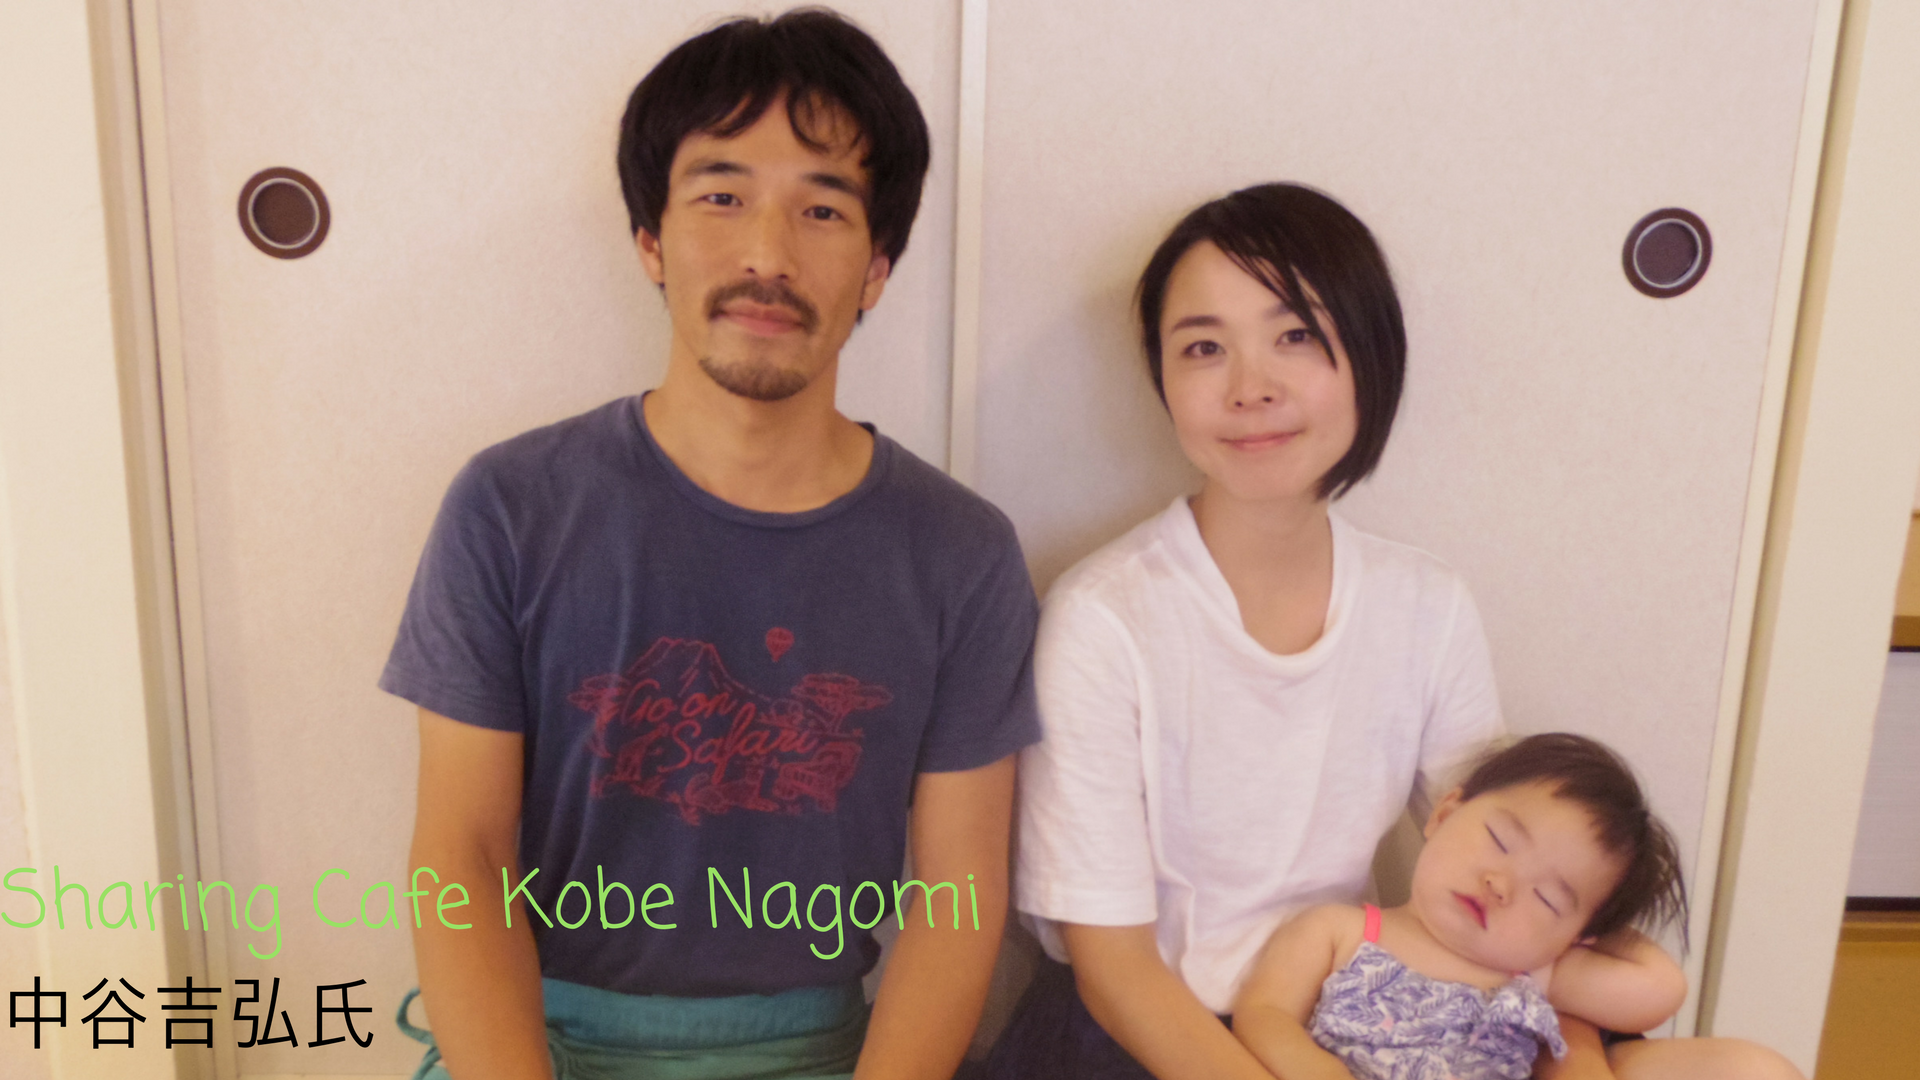 Sharing Cafe Kobe Nagomi